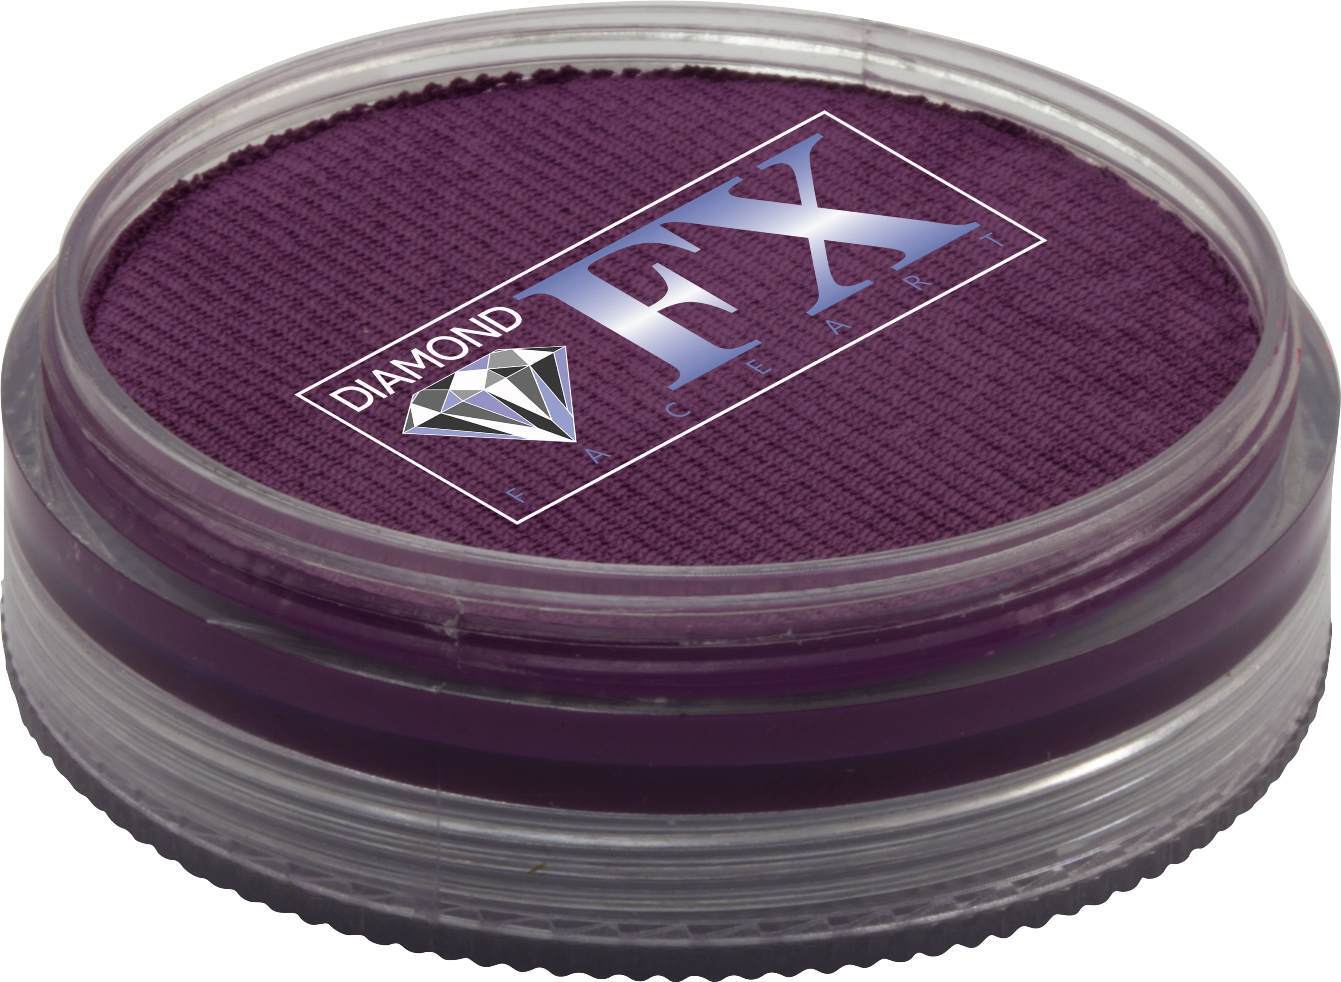 Diamond FX Purple 45g - Small Image